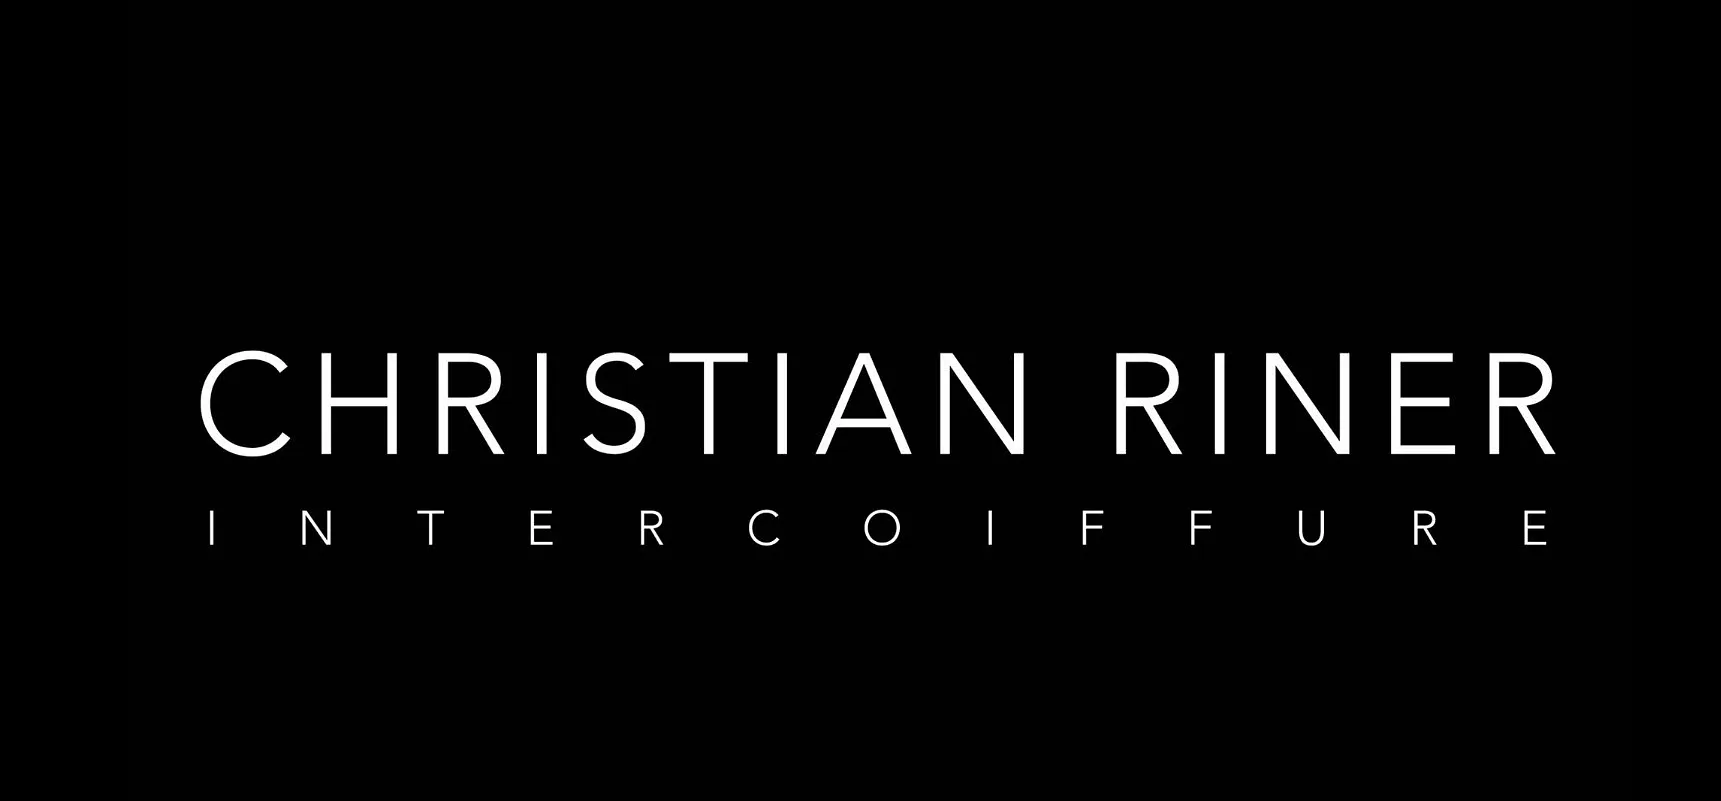 CHRISTIAN RINER Intercoiffure